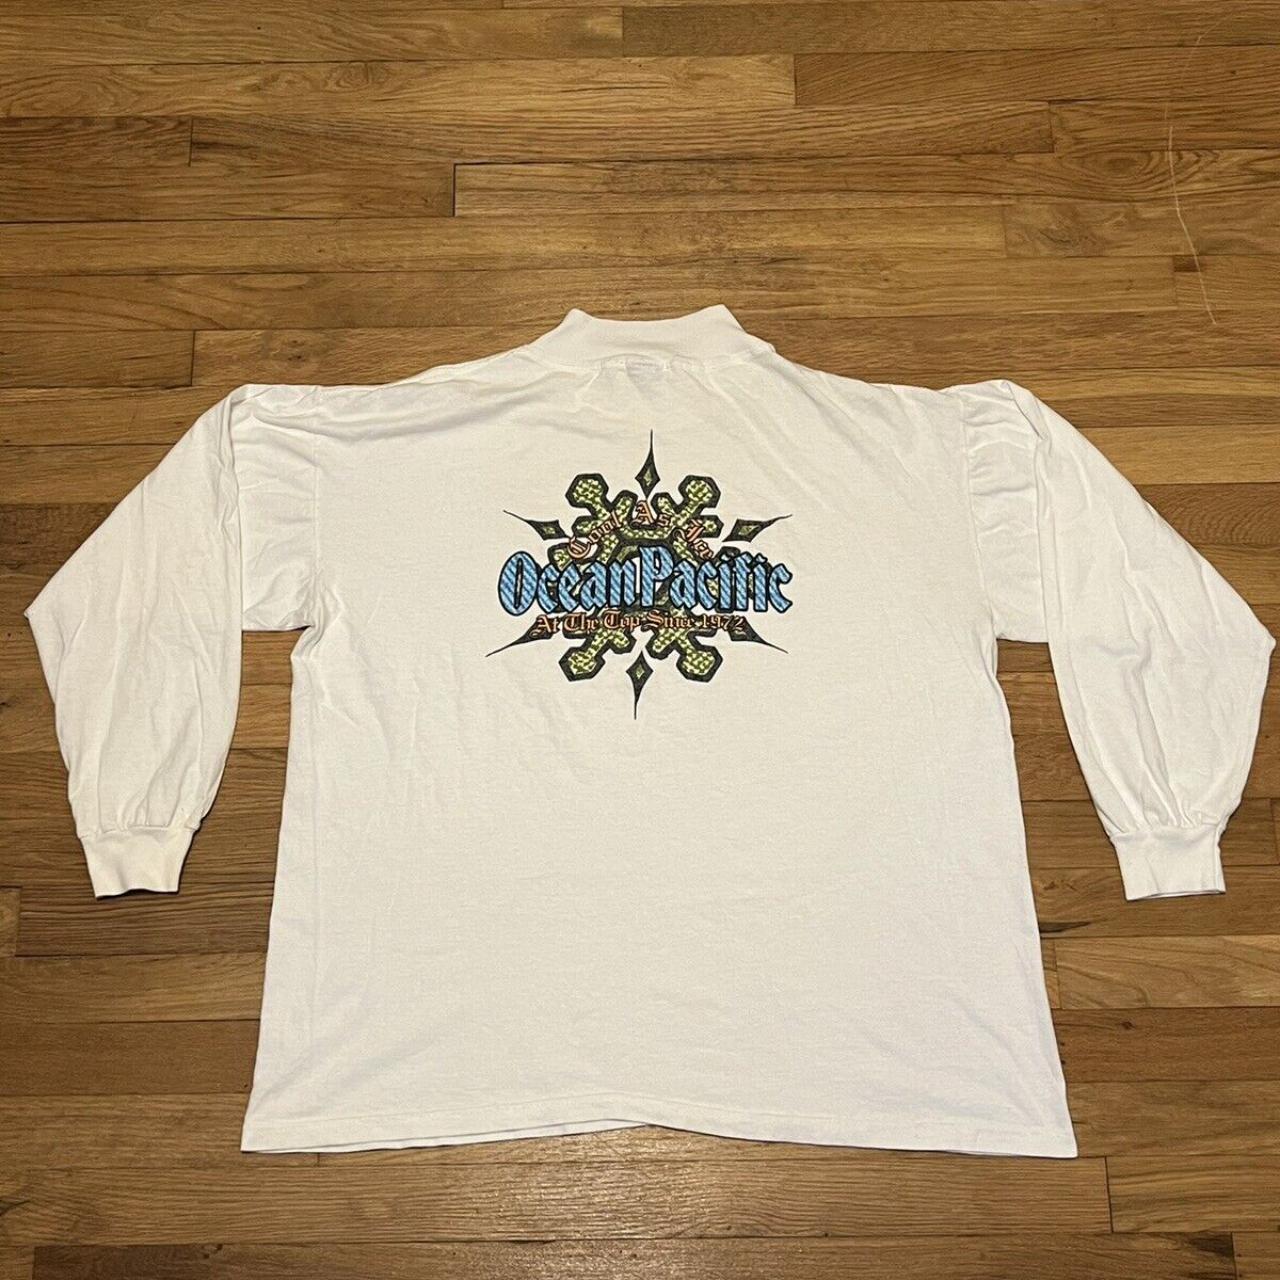 Ocean Pacific Men's White T-shirt (2)